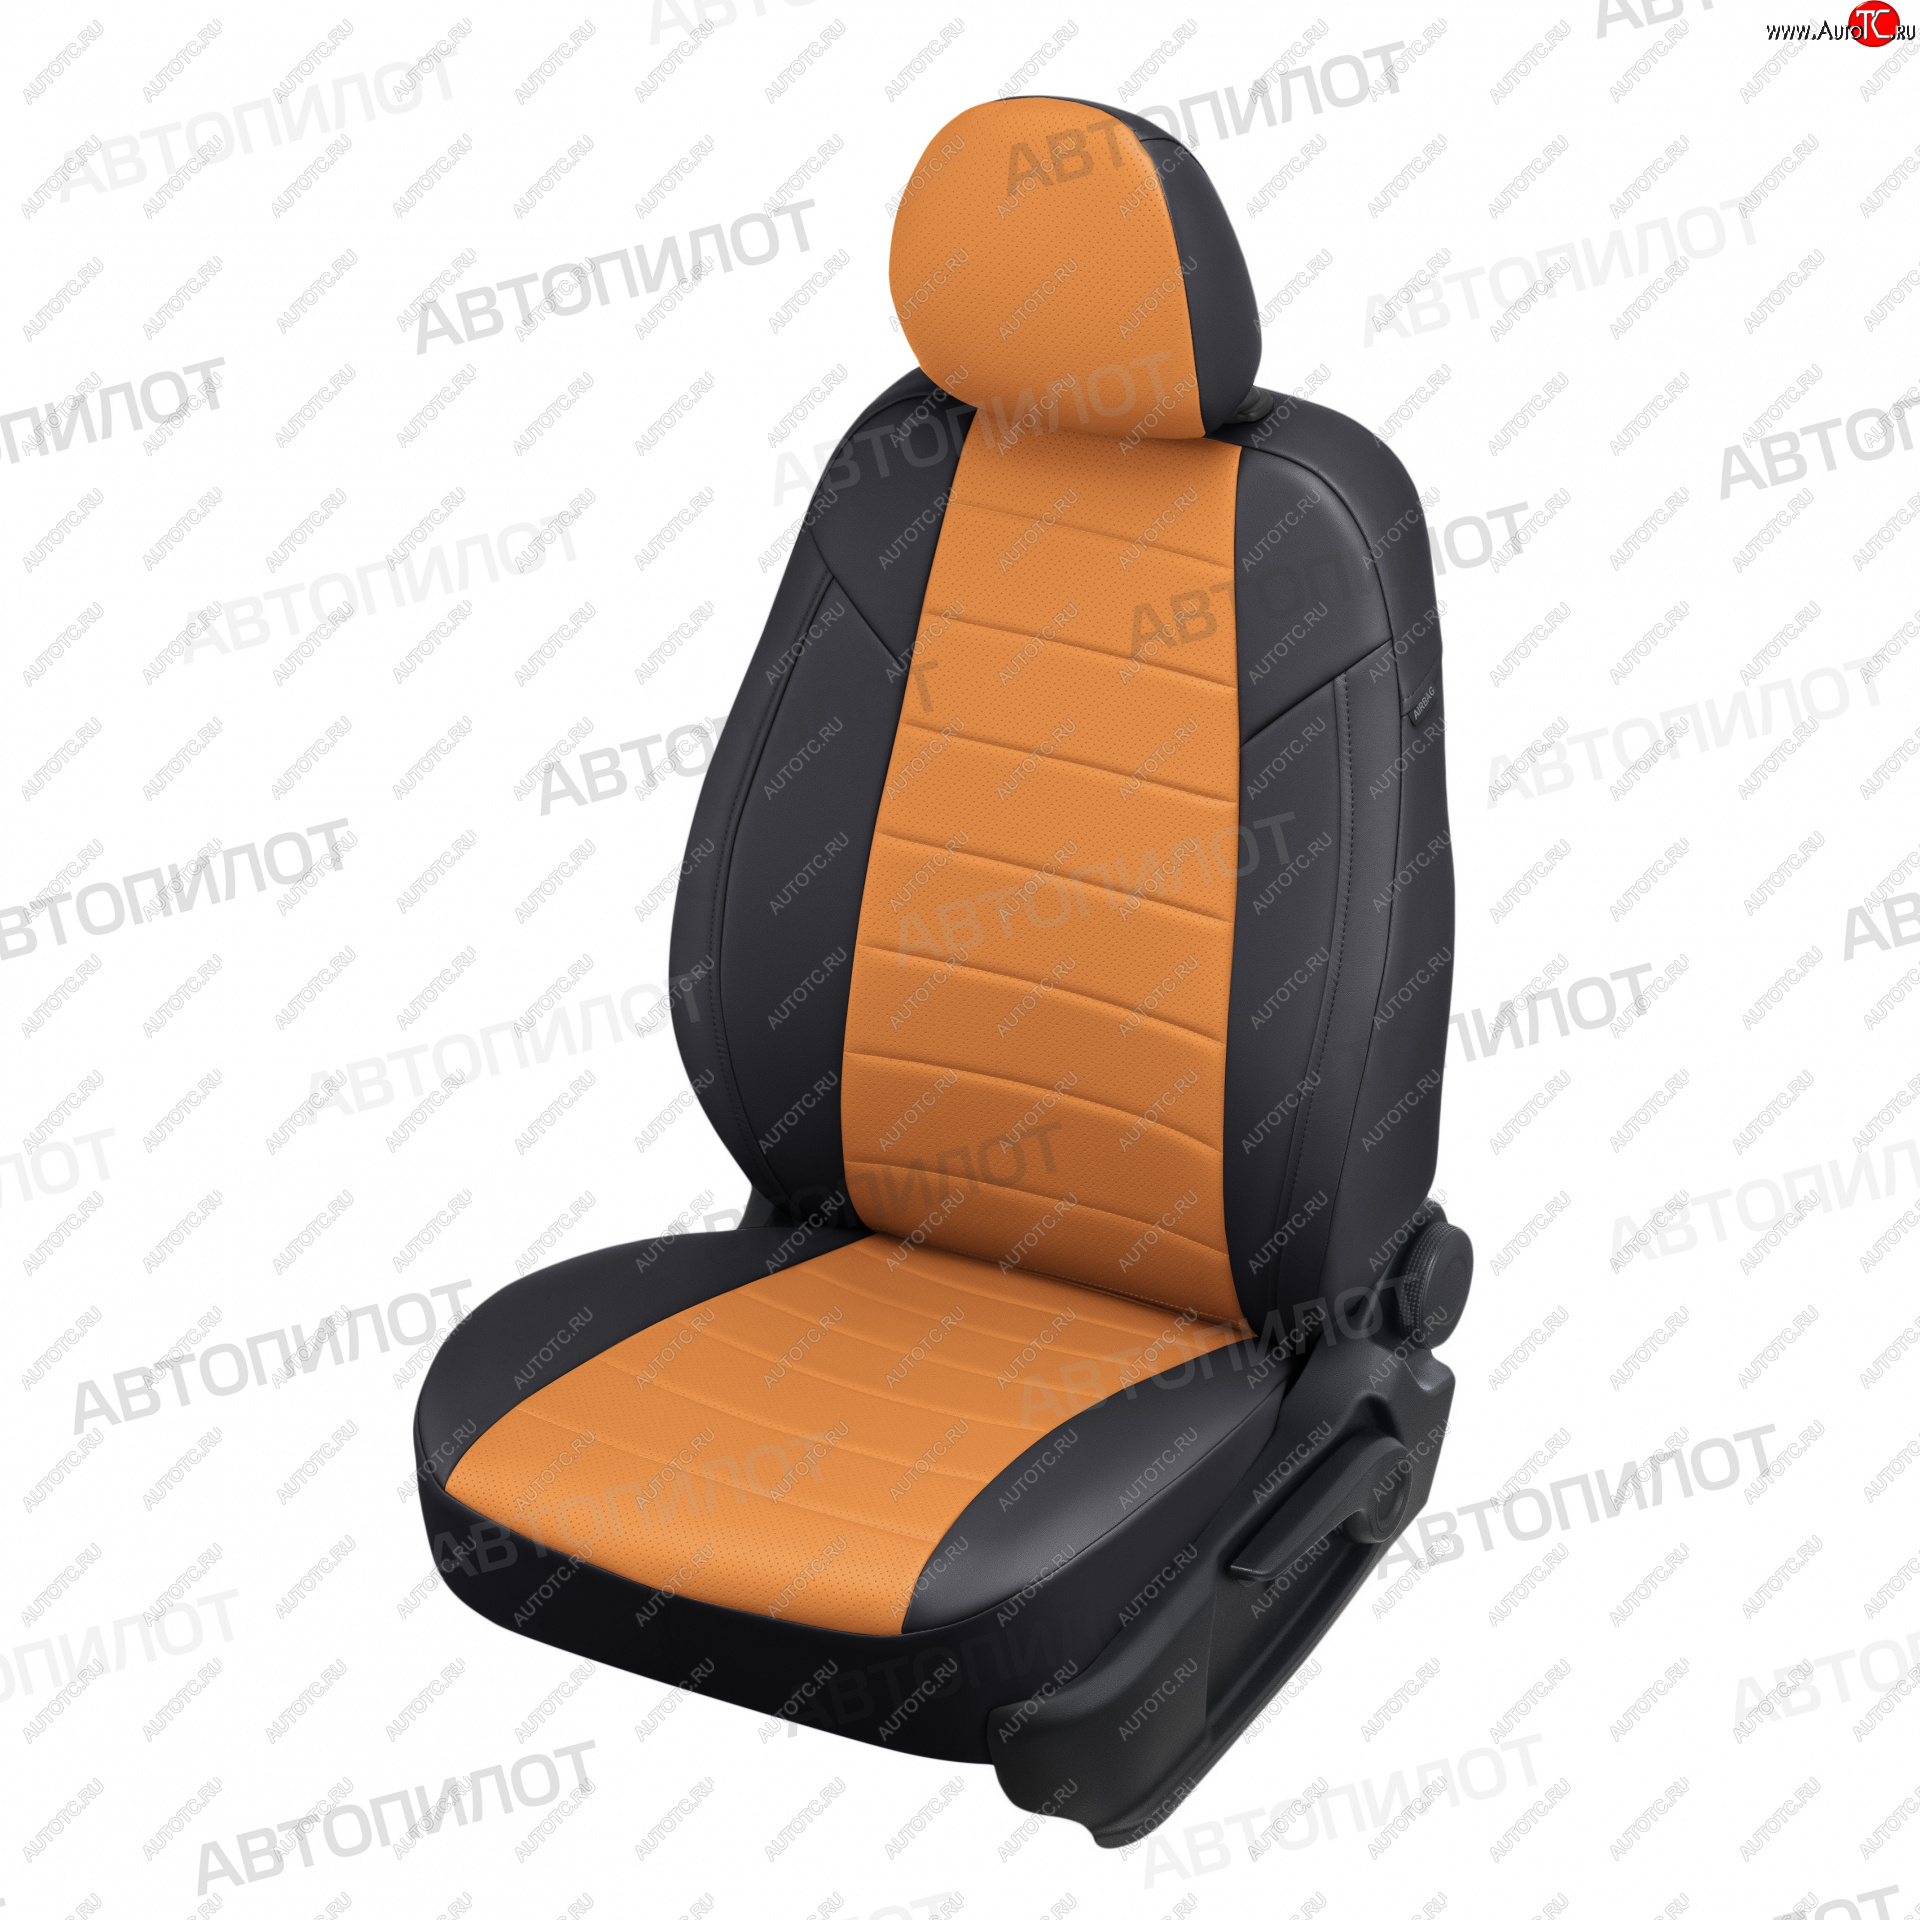 13 449 р. Чехлы сидений (экокожа) Автопилот  KIA Rio  2 JB (2005-2011) (черный/оранж)